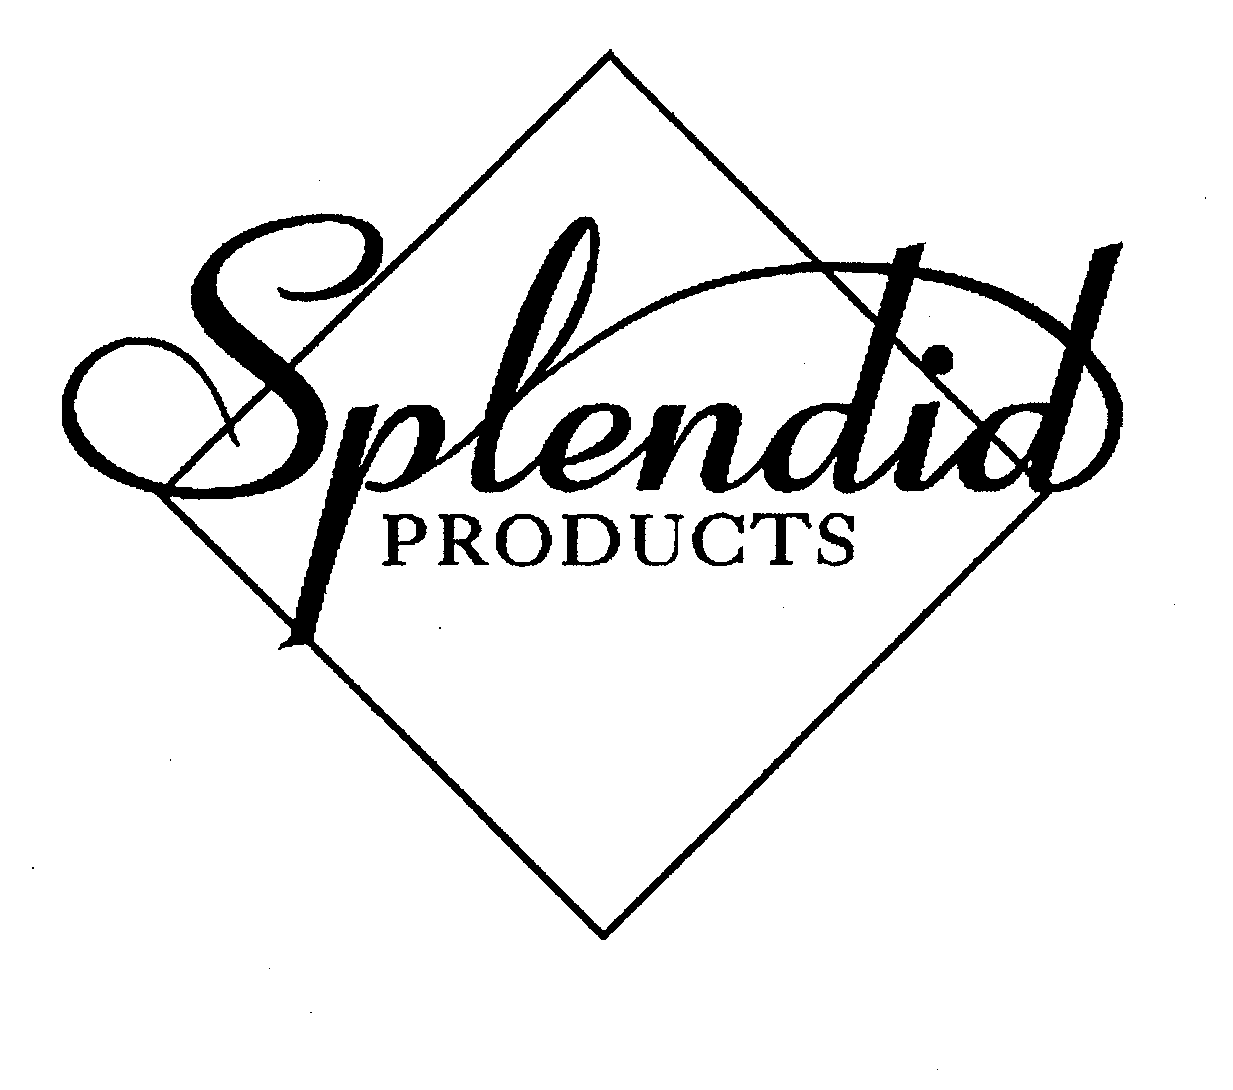  SPLENDID PRODUCTS